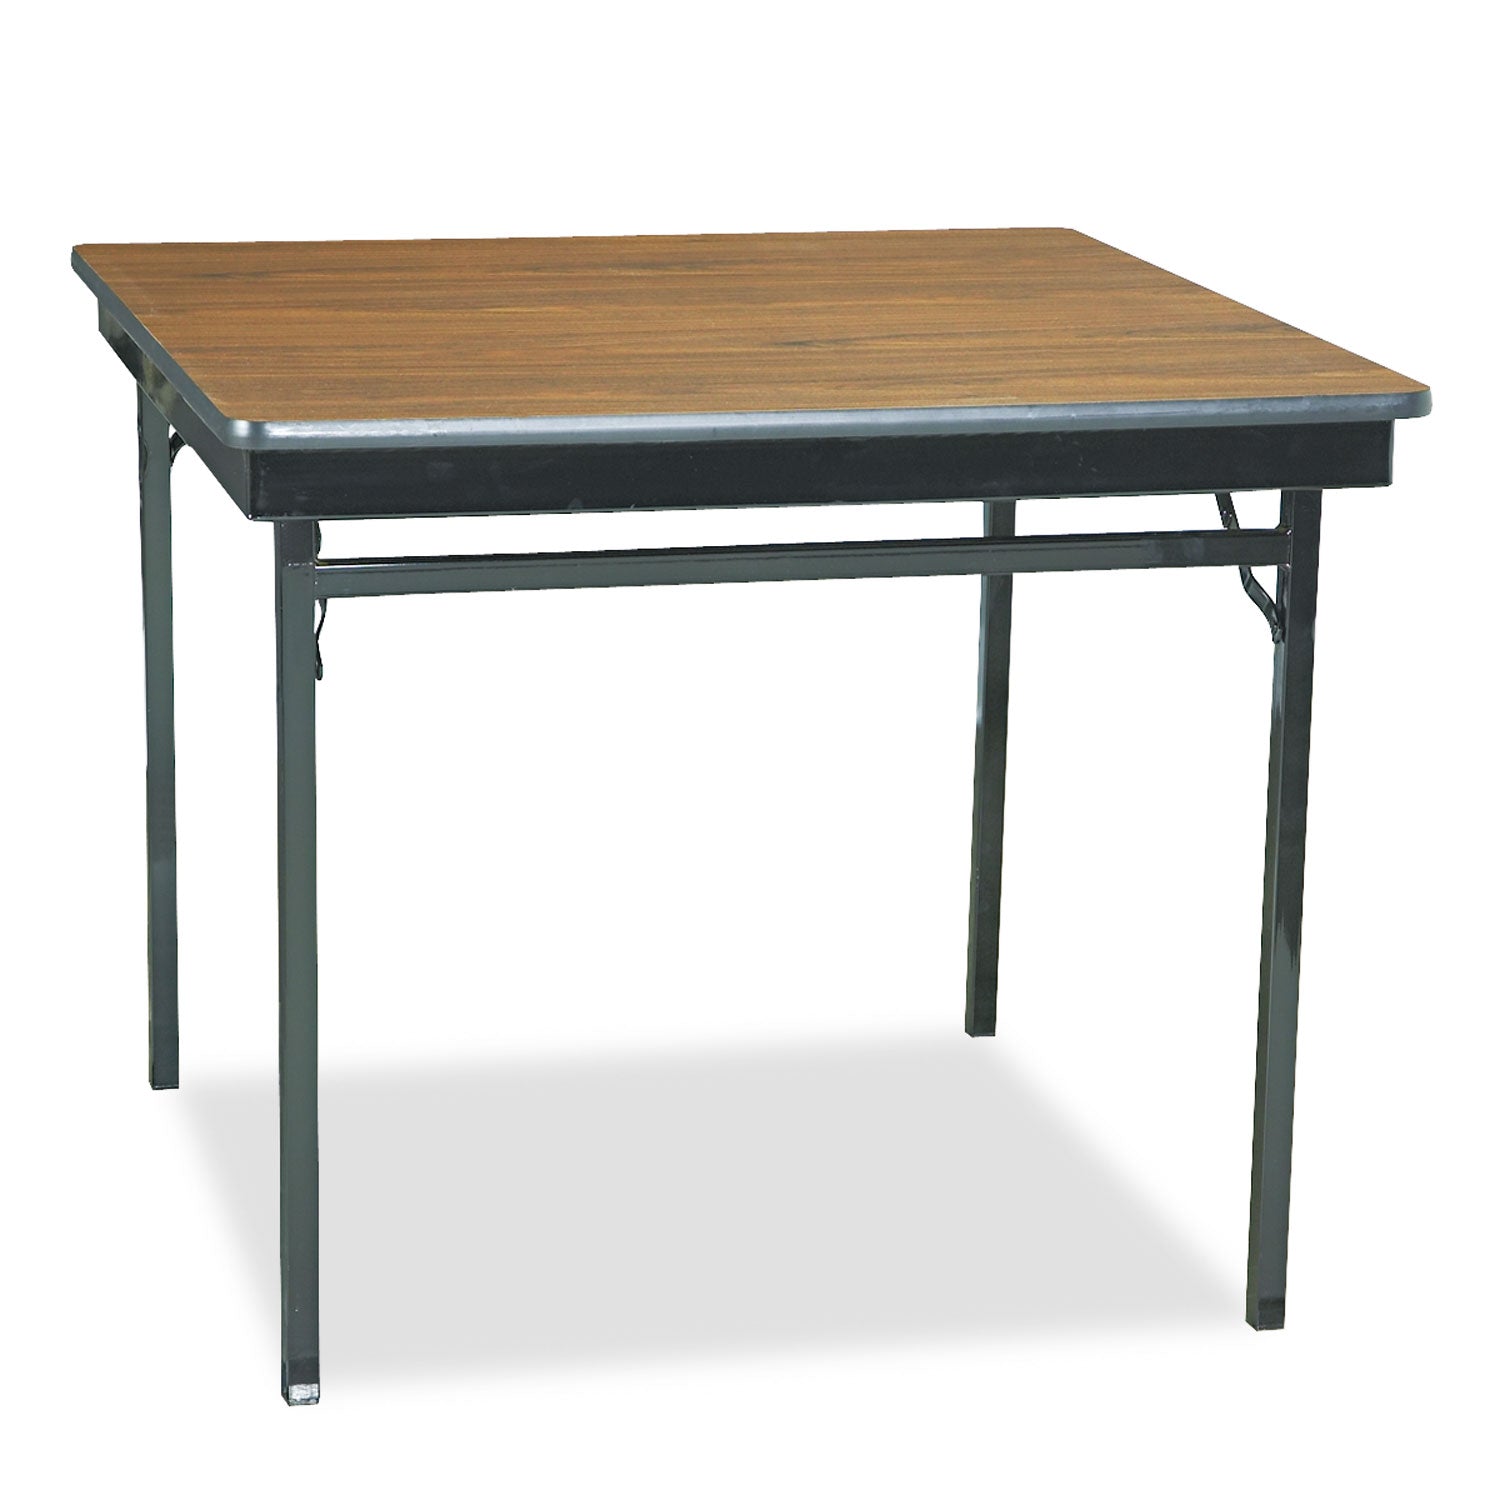 Special Size Folding Table, Square, 36w x 36d x 30h, Walnut/Black - 